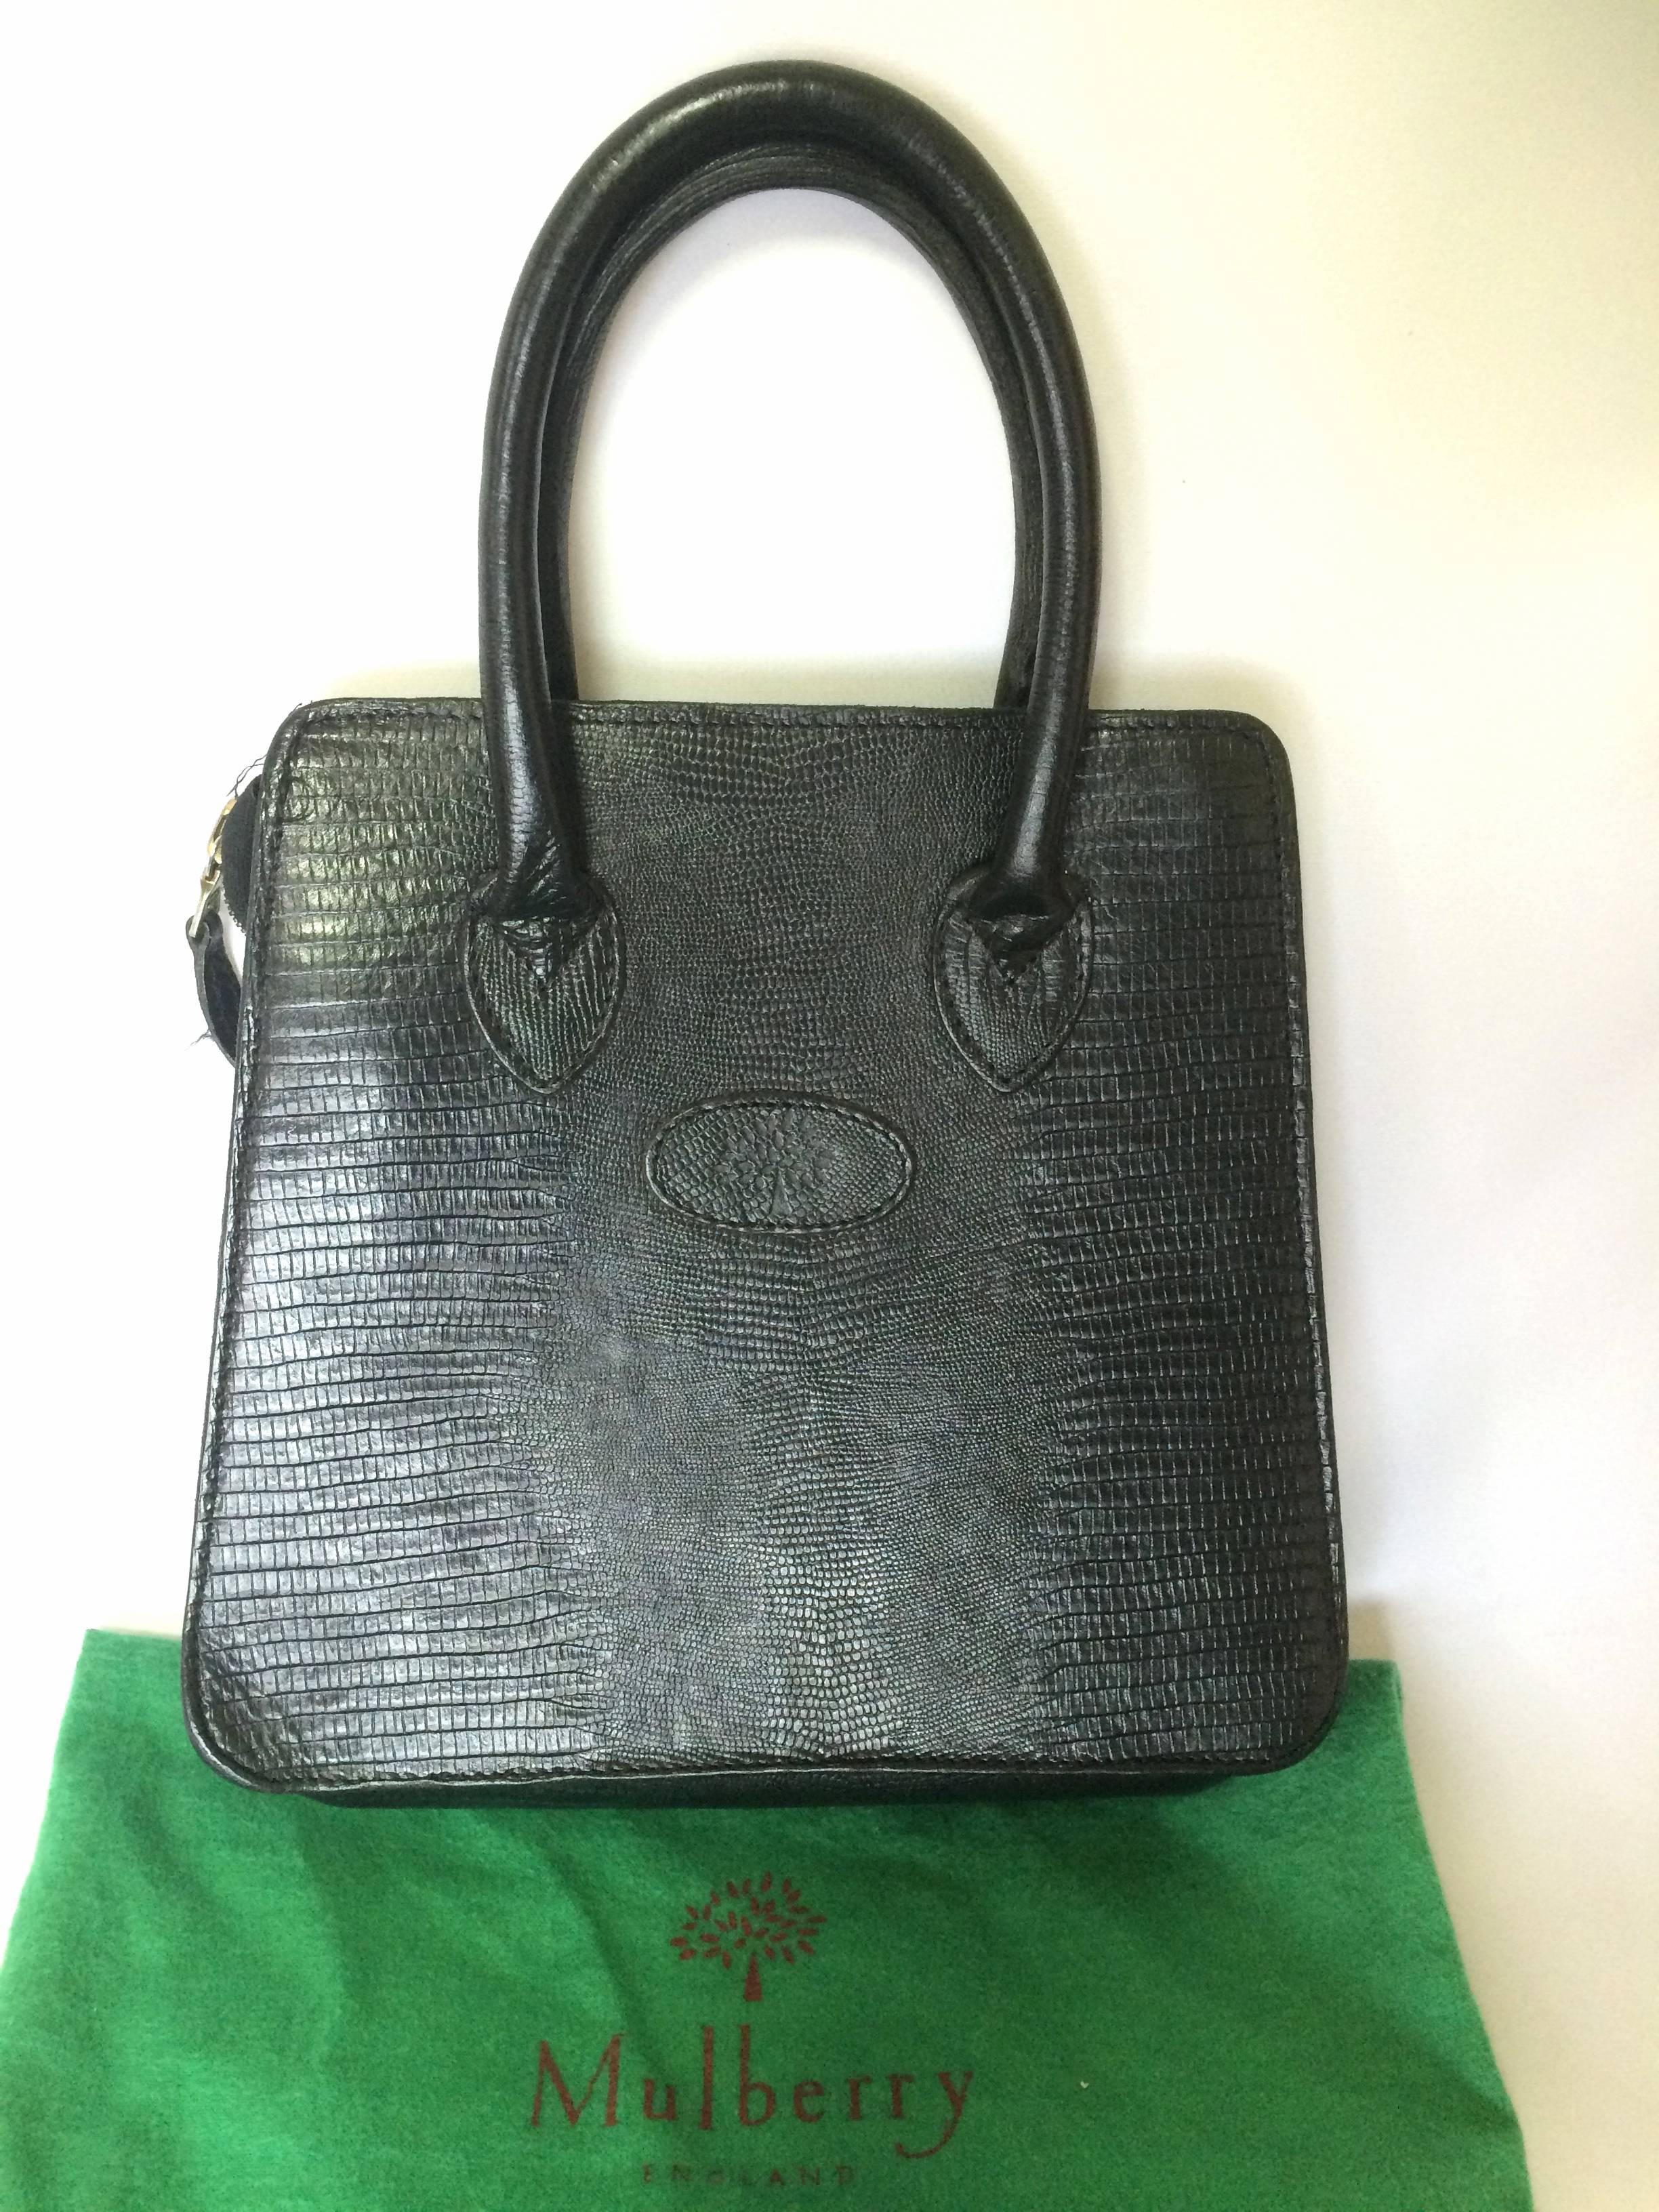 Black Vintage Mulberry lizard embossed black leather mini tote bag. By Roger Saul 